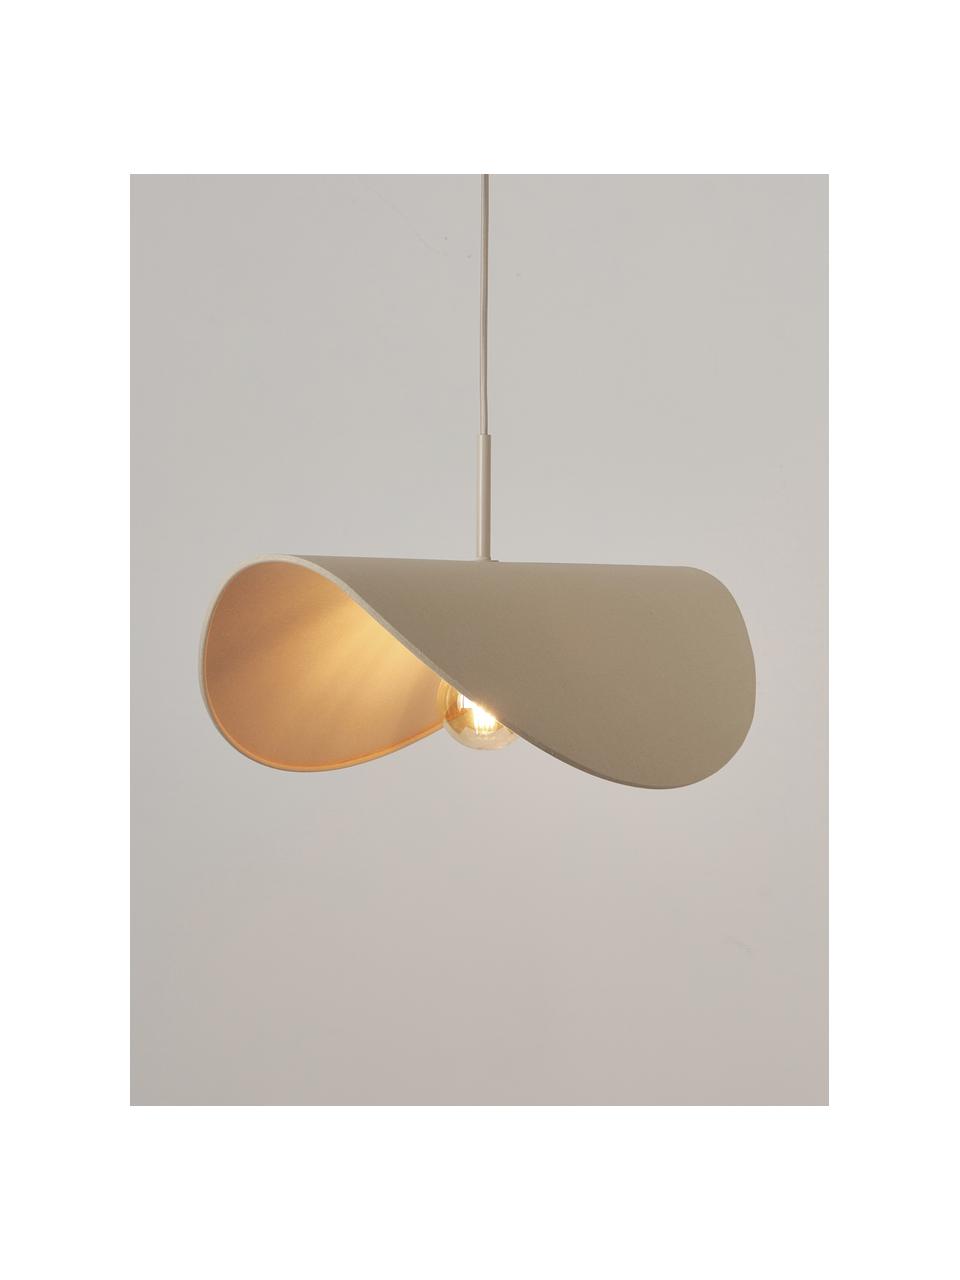 Design hanglamp Kenzie van linnen, Lampenkap: linnen, Lichtbeige, B 55 x D 37 cm